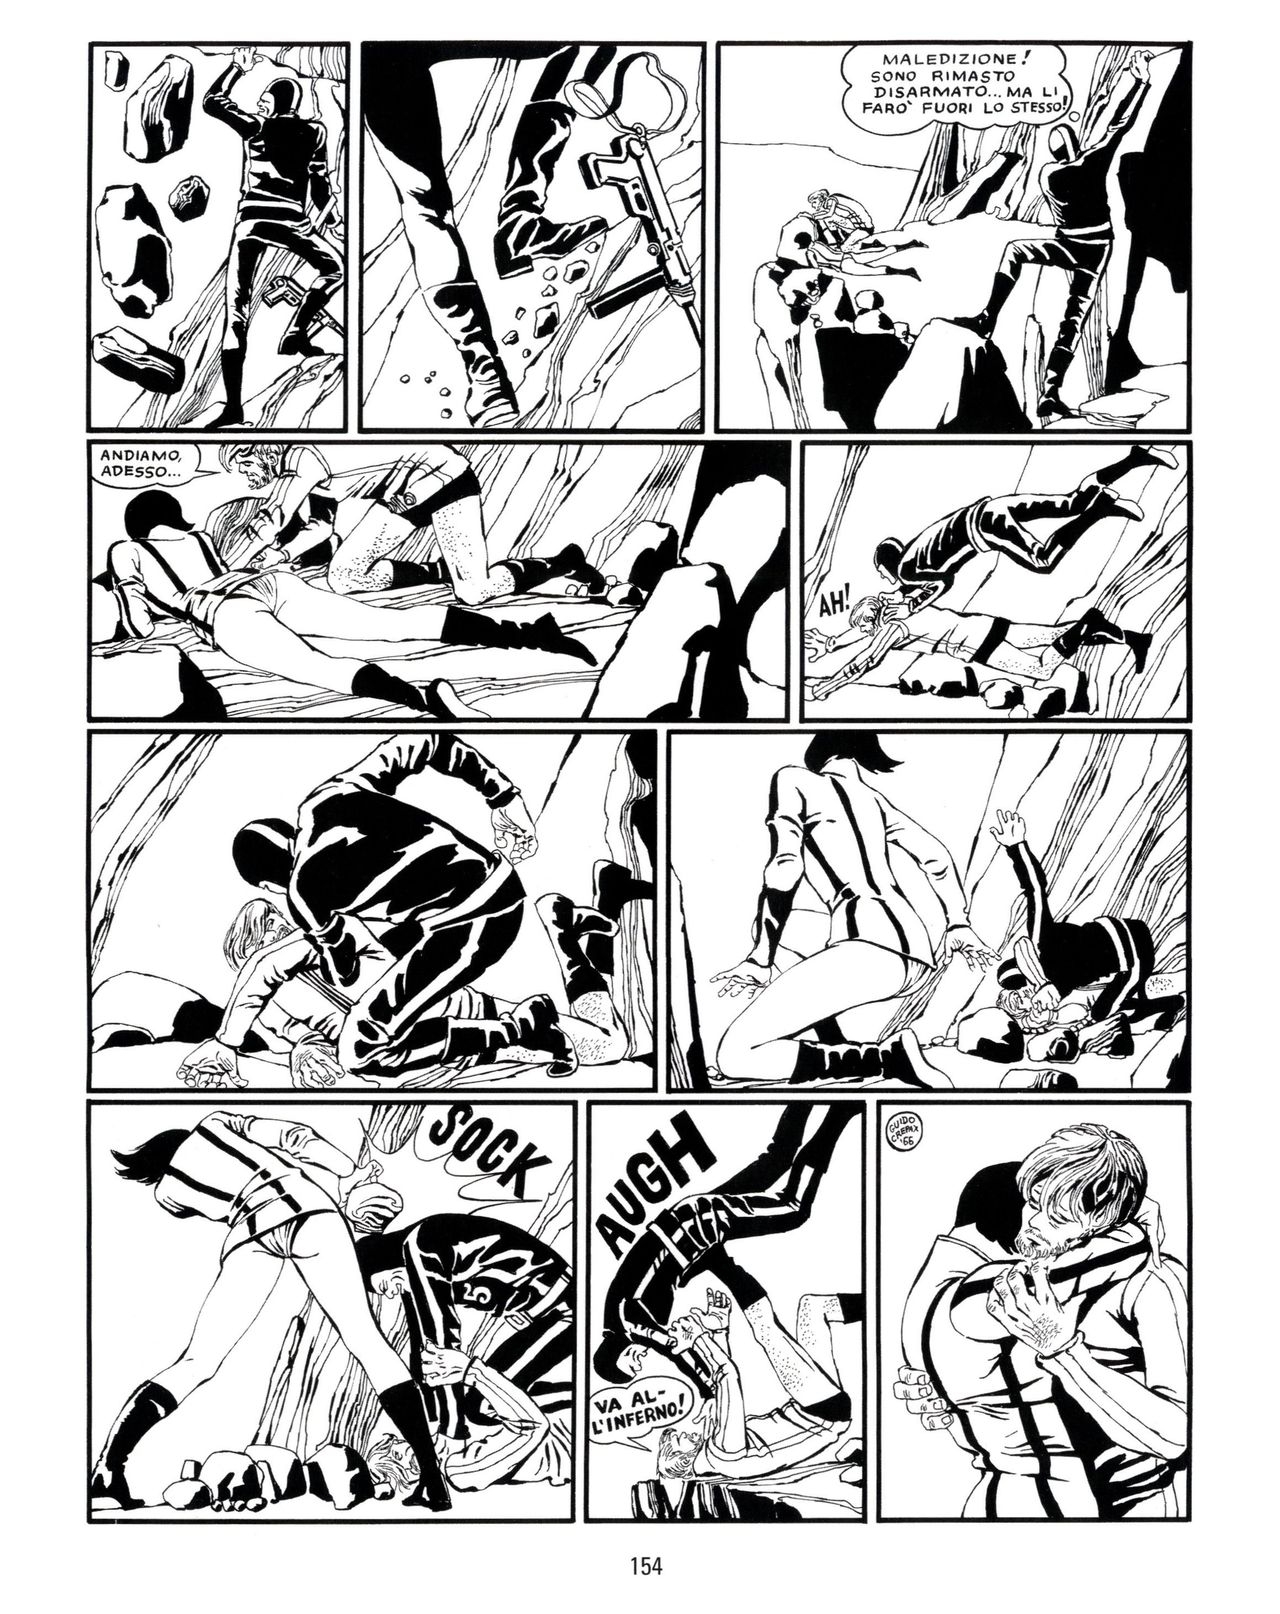 [Guido Crepax] Erotica Fumetti #25 : L'ascesa dei sotterranei : I cavalieri ciechi [Italian] 155